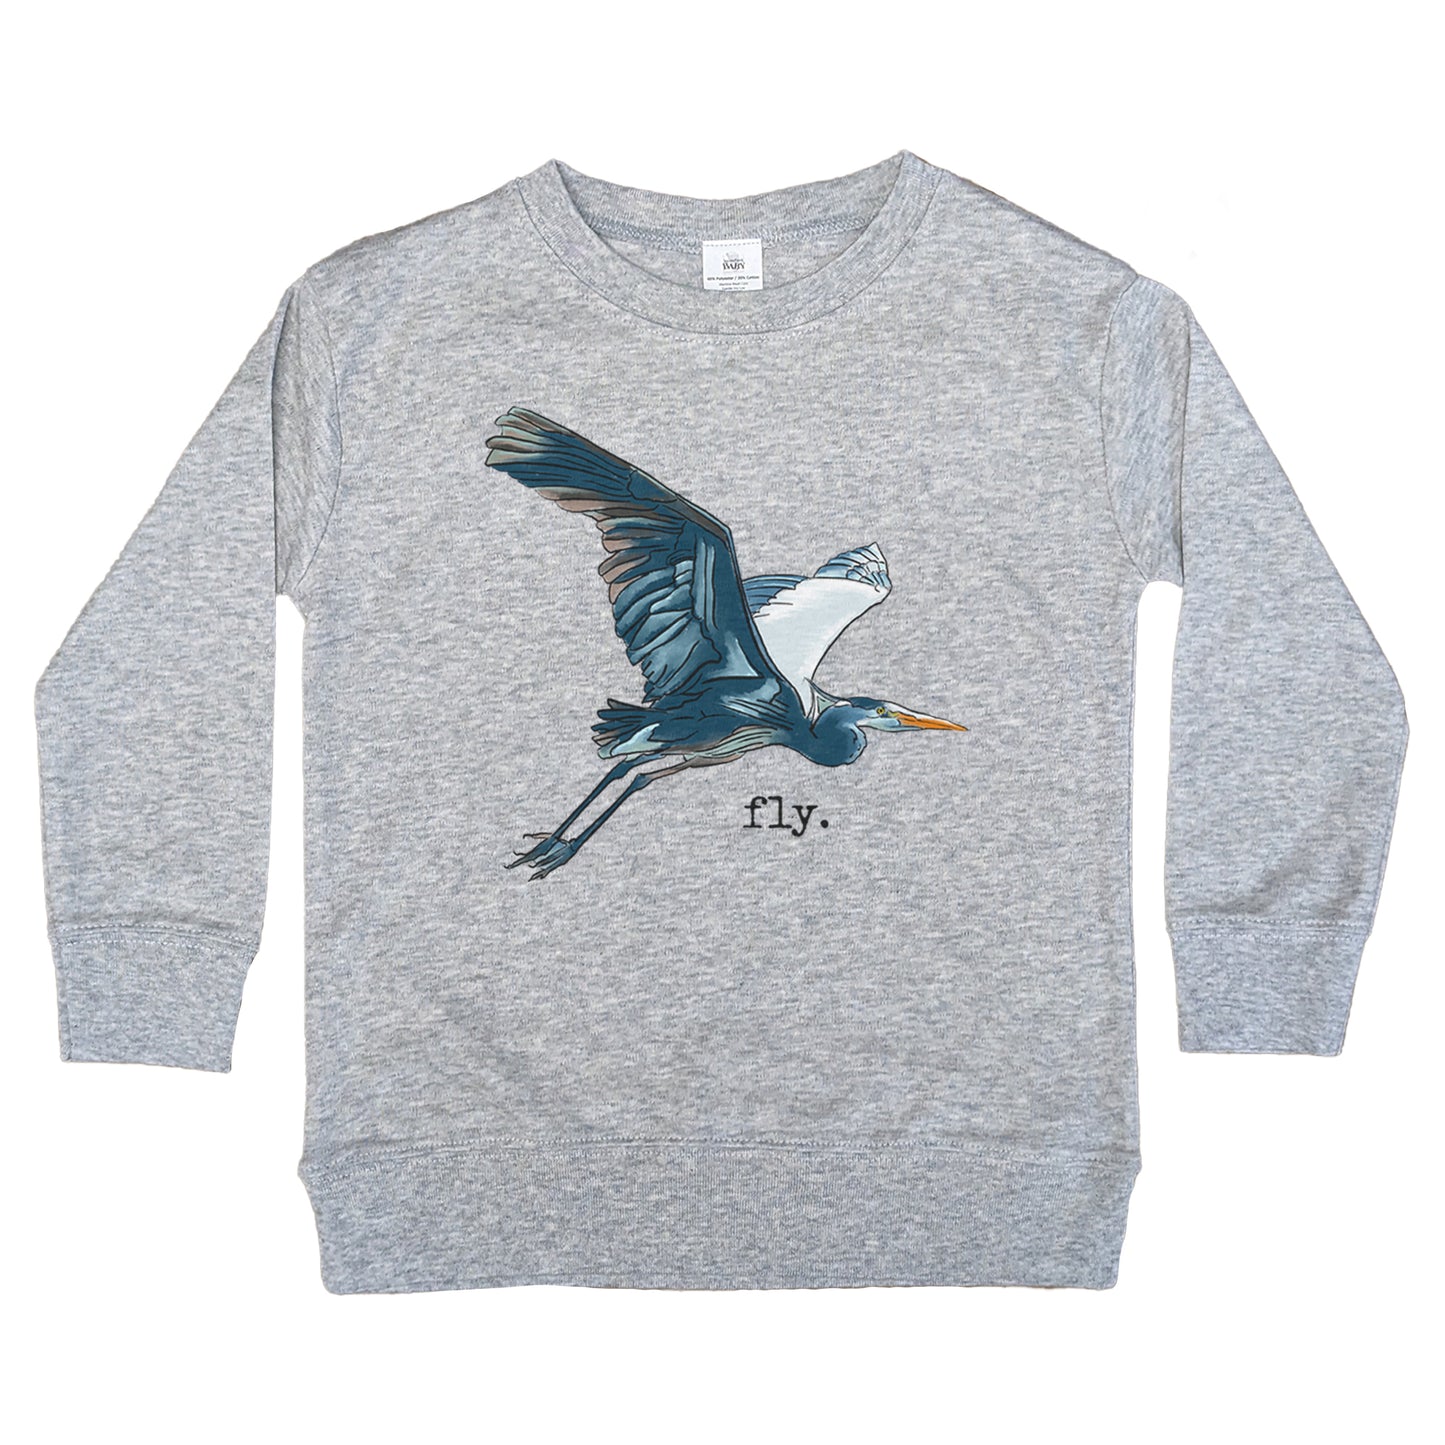 "Fly" Blue Heron Lake Life Summer Long Sleeve Shirt for Kids